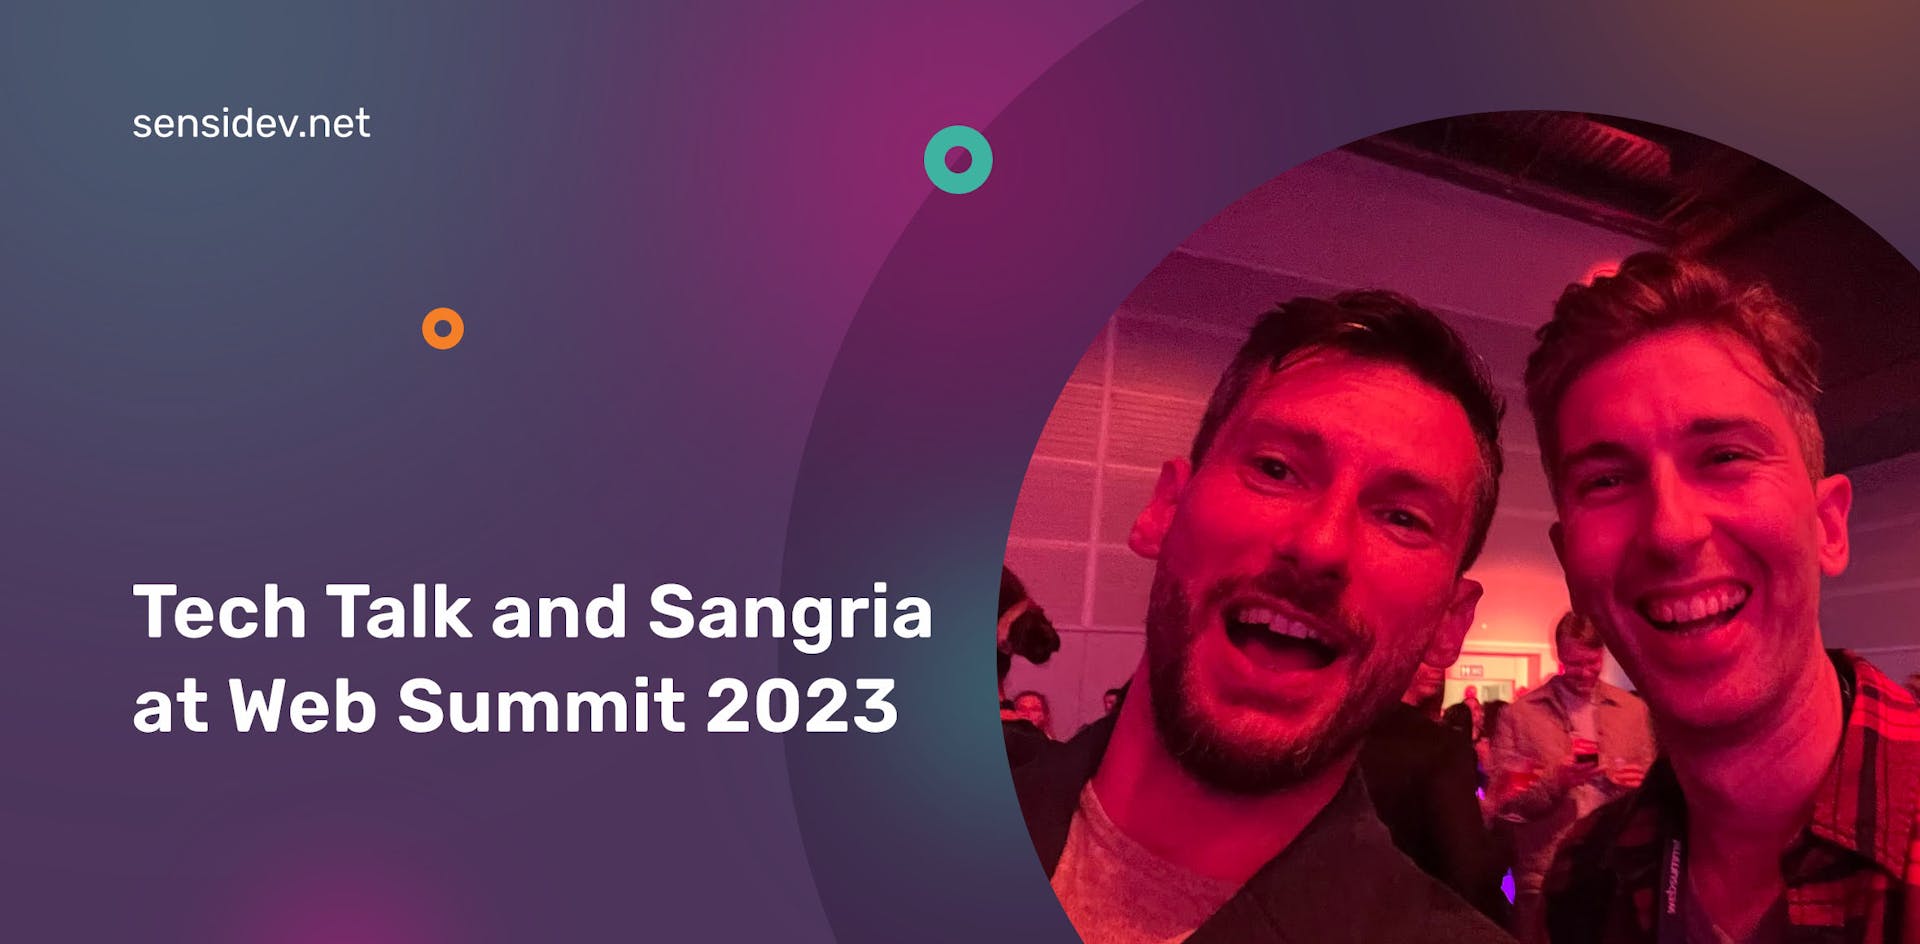 Tech Talk and Sangria at Web Summit 2023